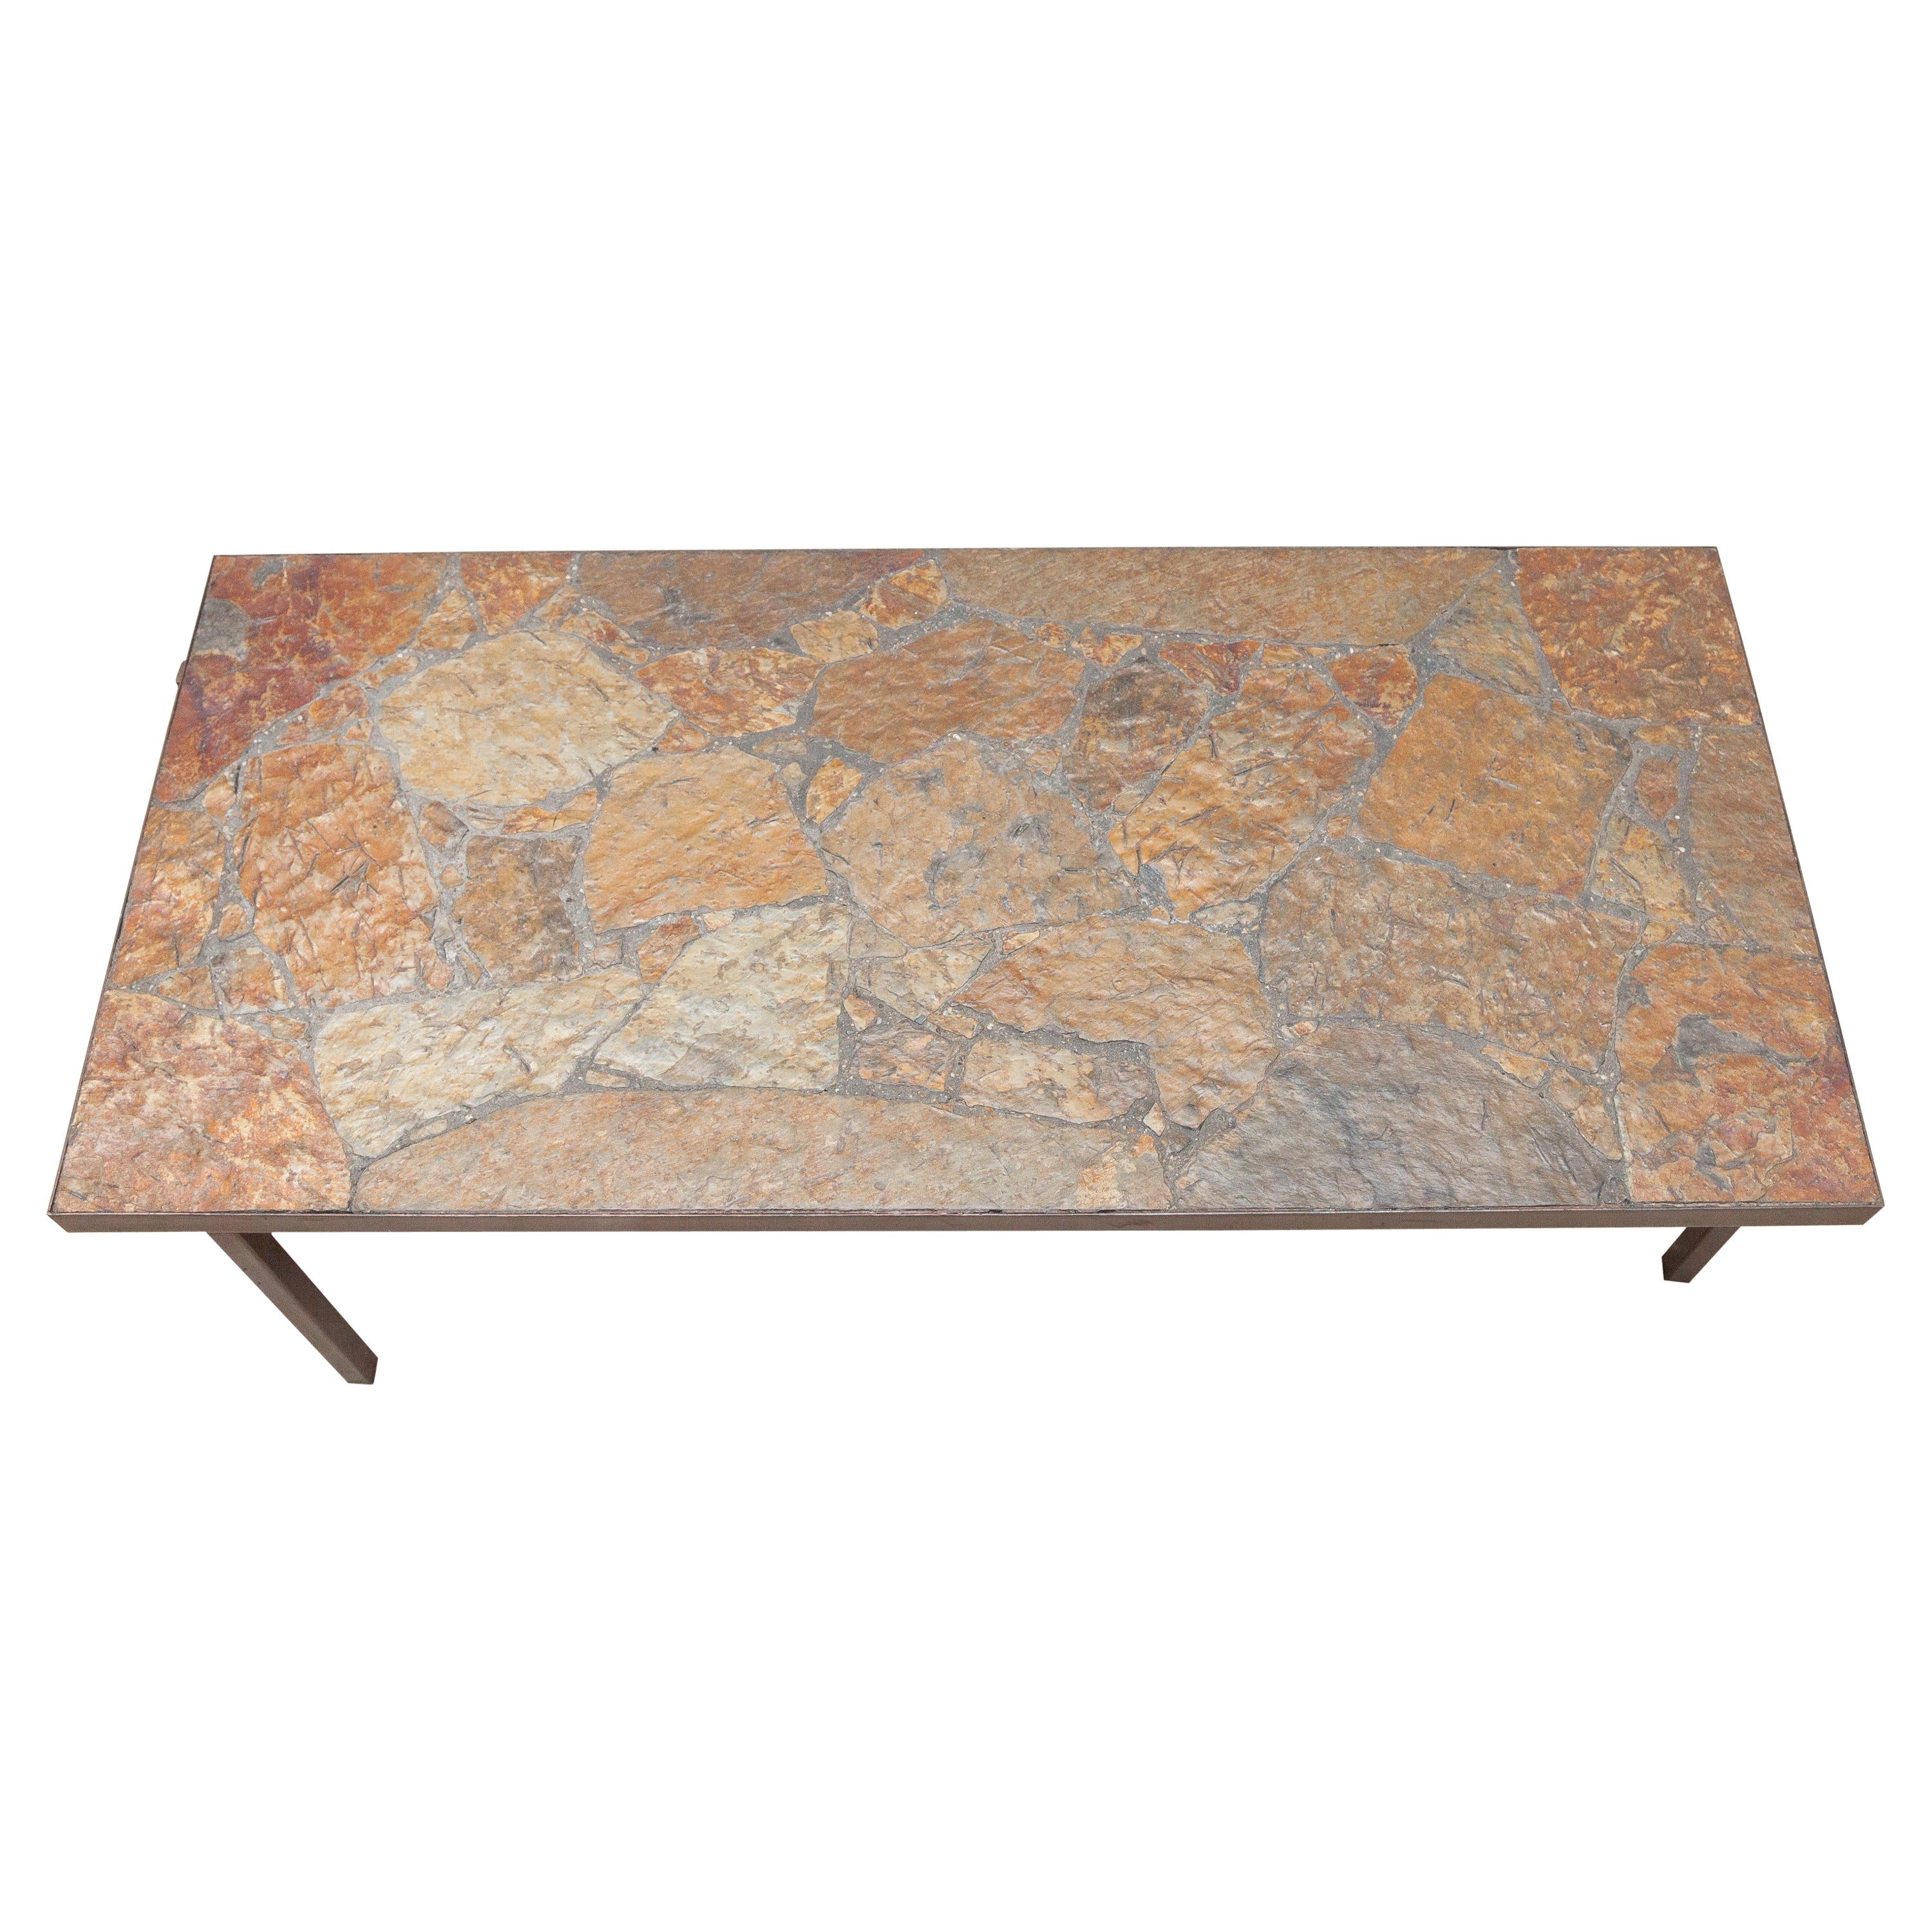 Slate Stone Brutalist Coffee Table, Dutch Design